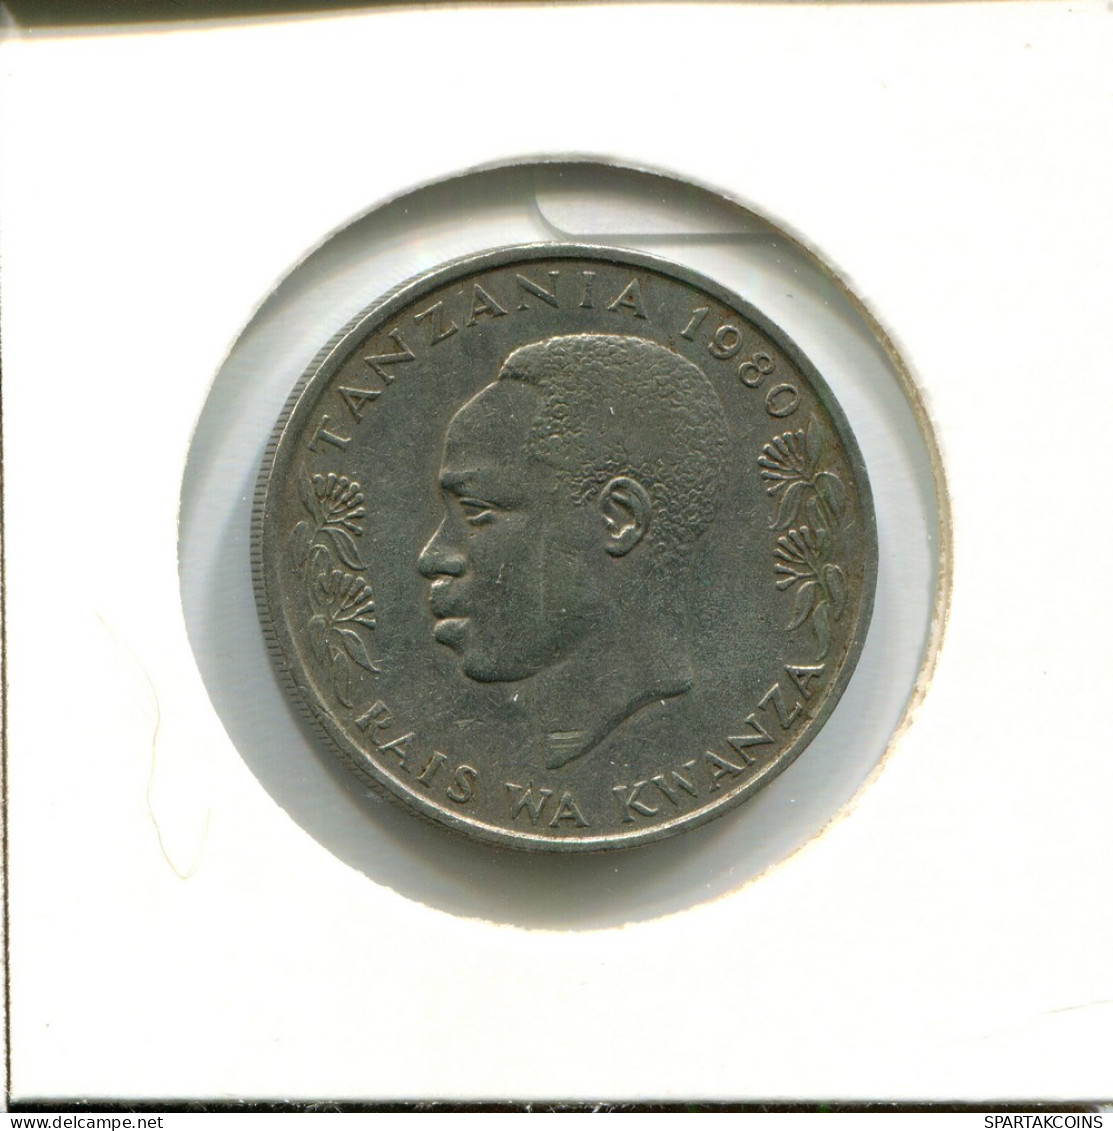 1 SHILLINGI 1980 TANZANIA Coin #AT979.U - Tanzania